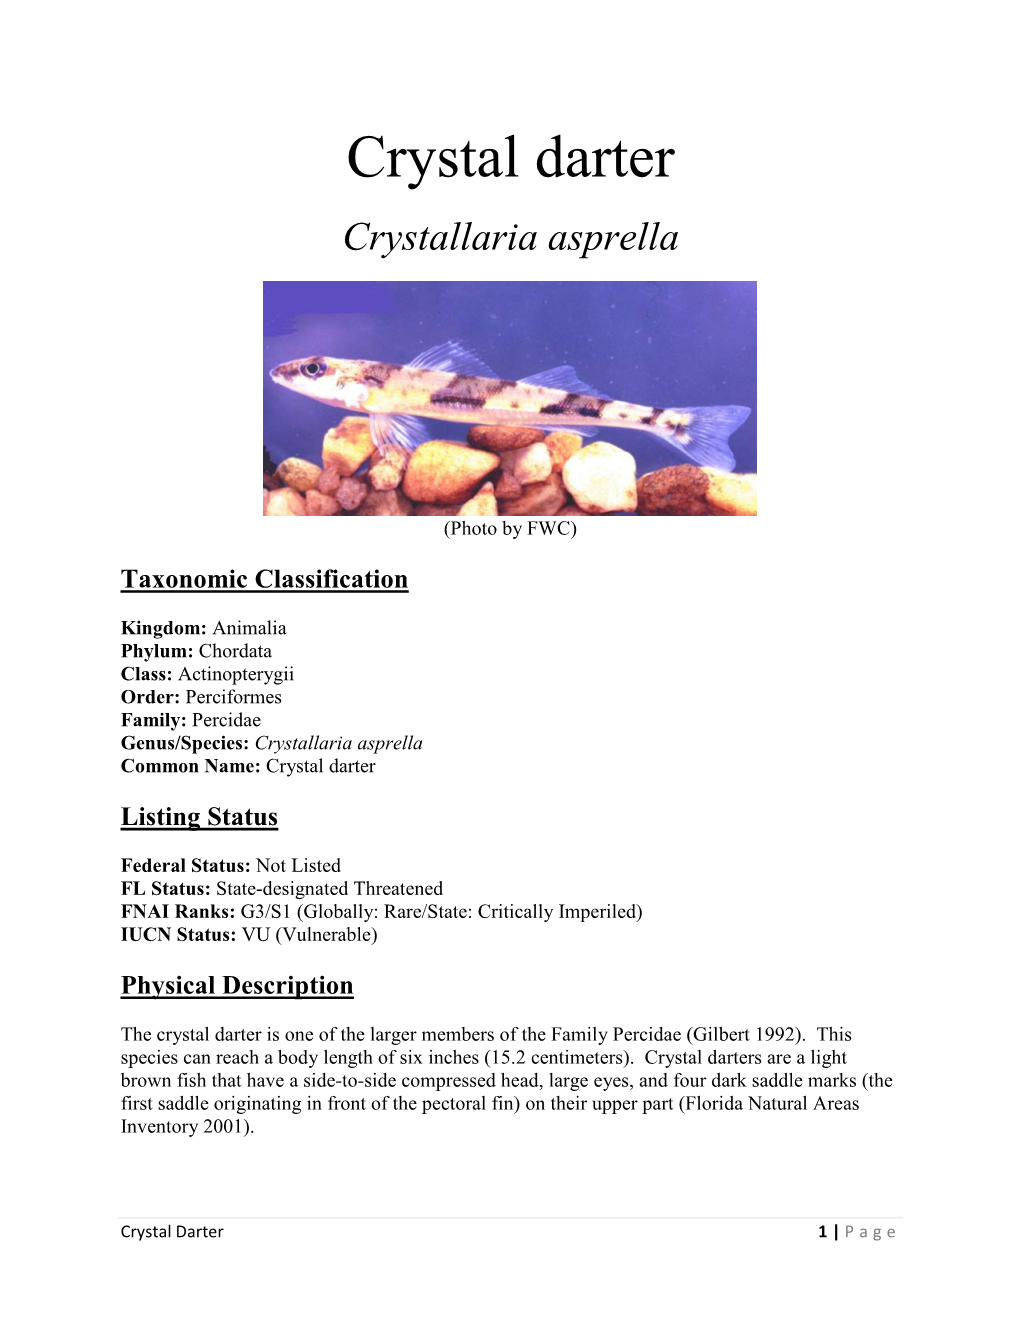 Crystal Darter